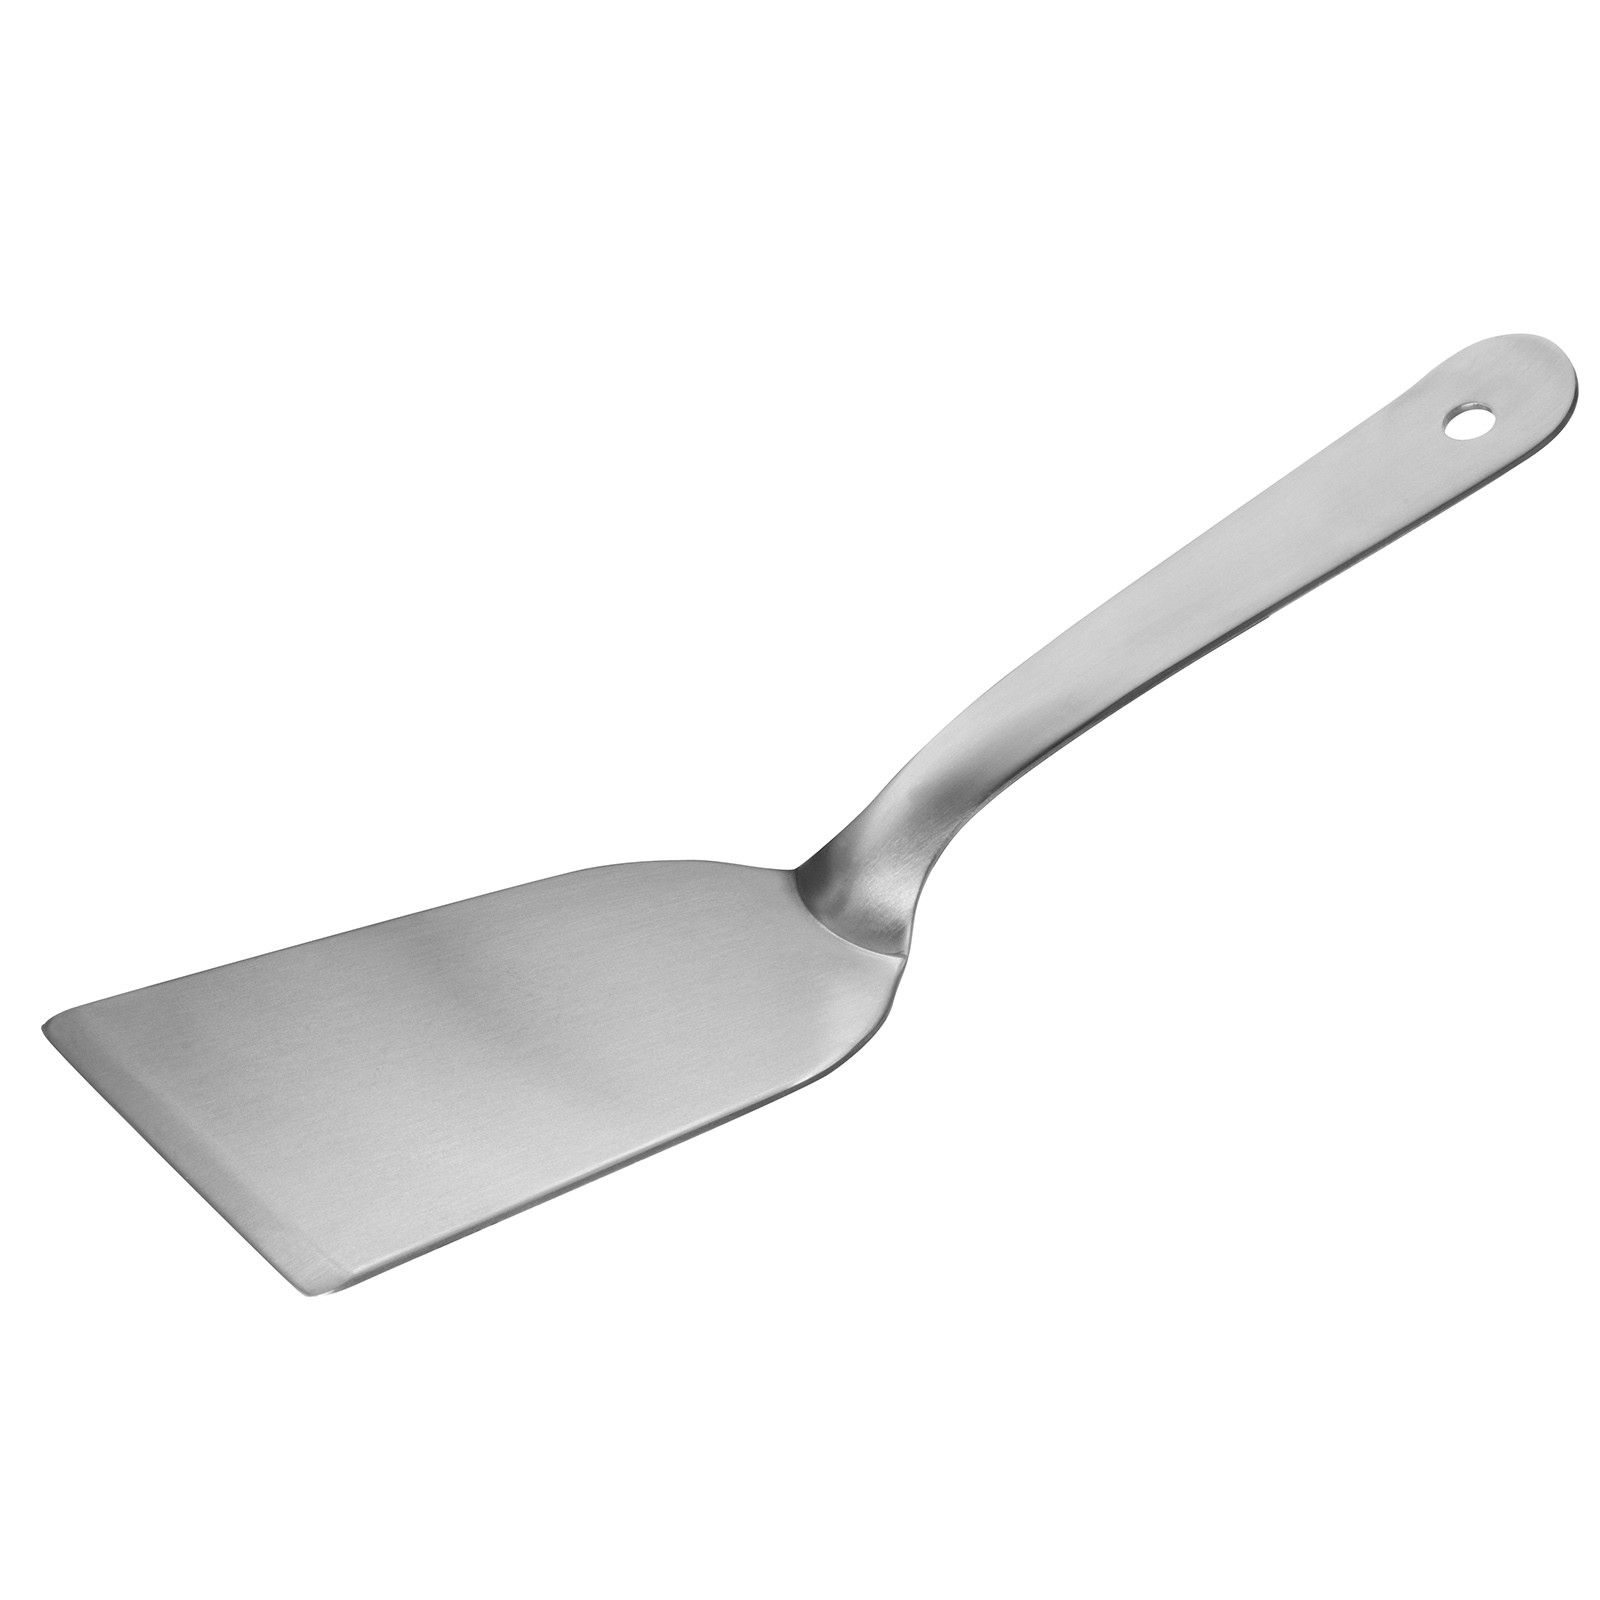 Serving spatula - POC, Spatulas - Cristel